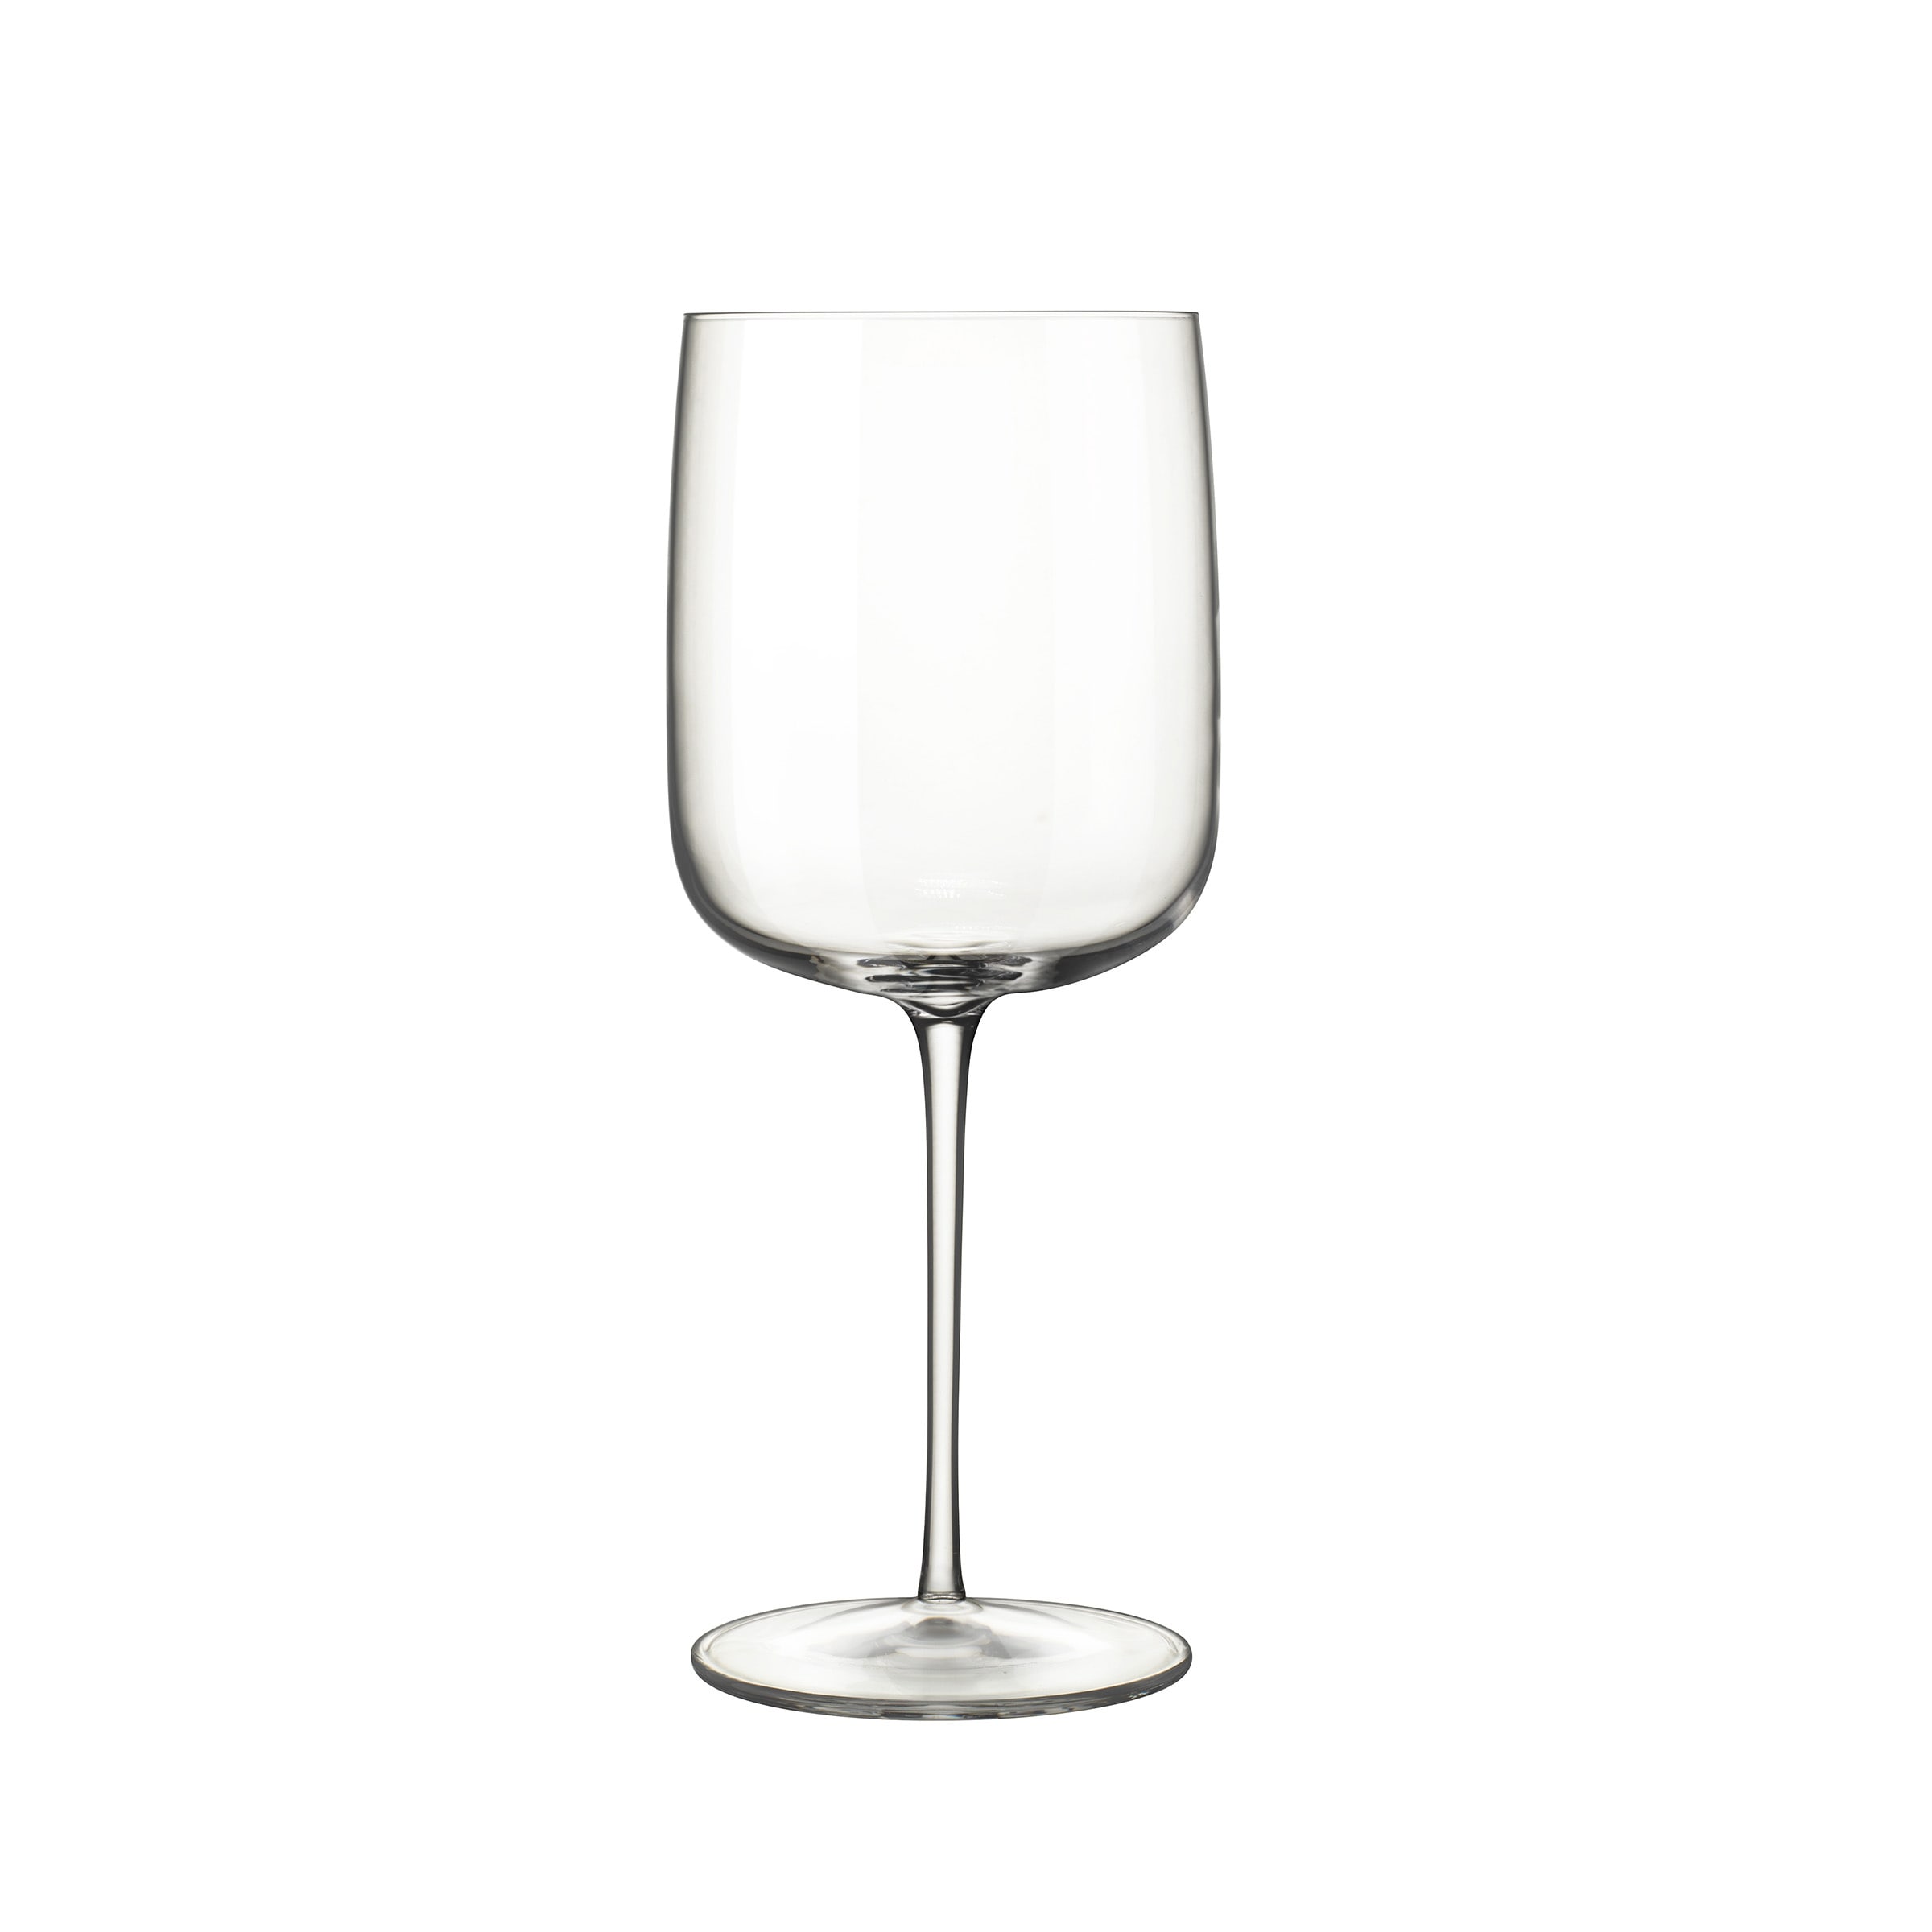 Vinoteque 15.75 oz Cognac and Spirits Glasses (Set Of 6)